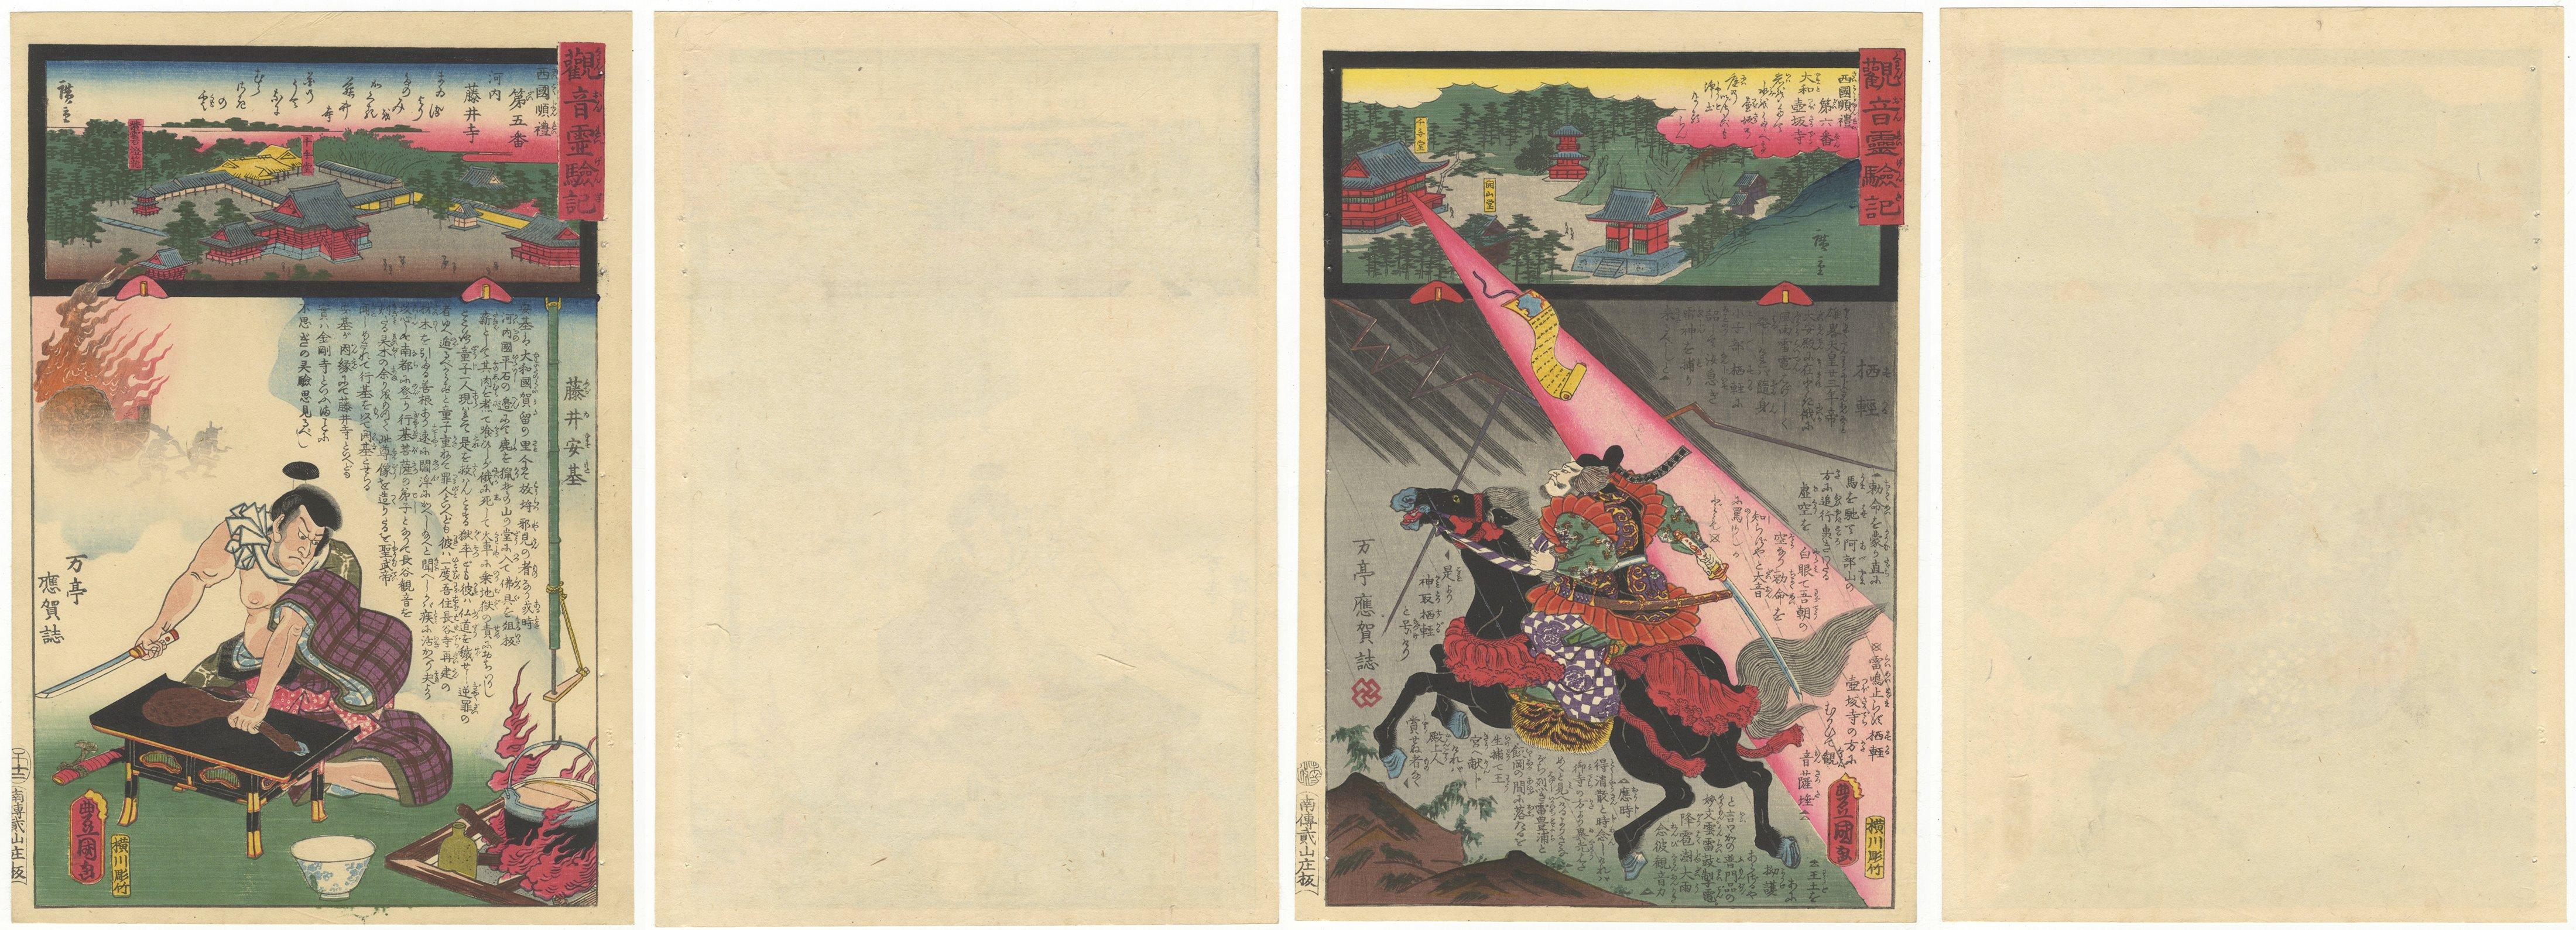 Artists: Utagawa Kunisada I (Toyokuni III)  (1786–1864) and Utagawa Hiroshige II (Shigenobu) (1826–1869)
Series: Miracles of Kannon (Kannon reigenki)
Date: 1859
Publisher: Yamadaya Shôjirô
Size: Around 36 x 25 cm each.
Condition report: Small